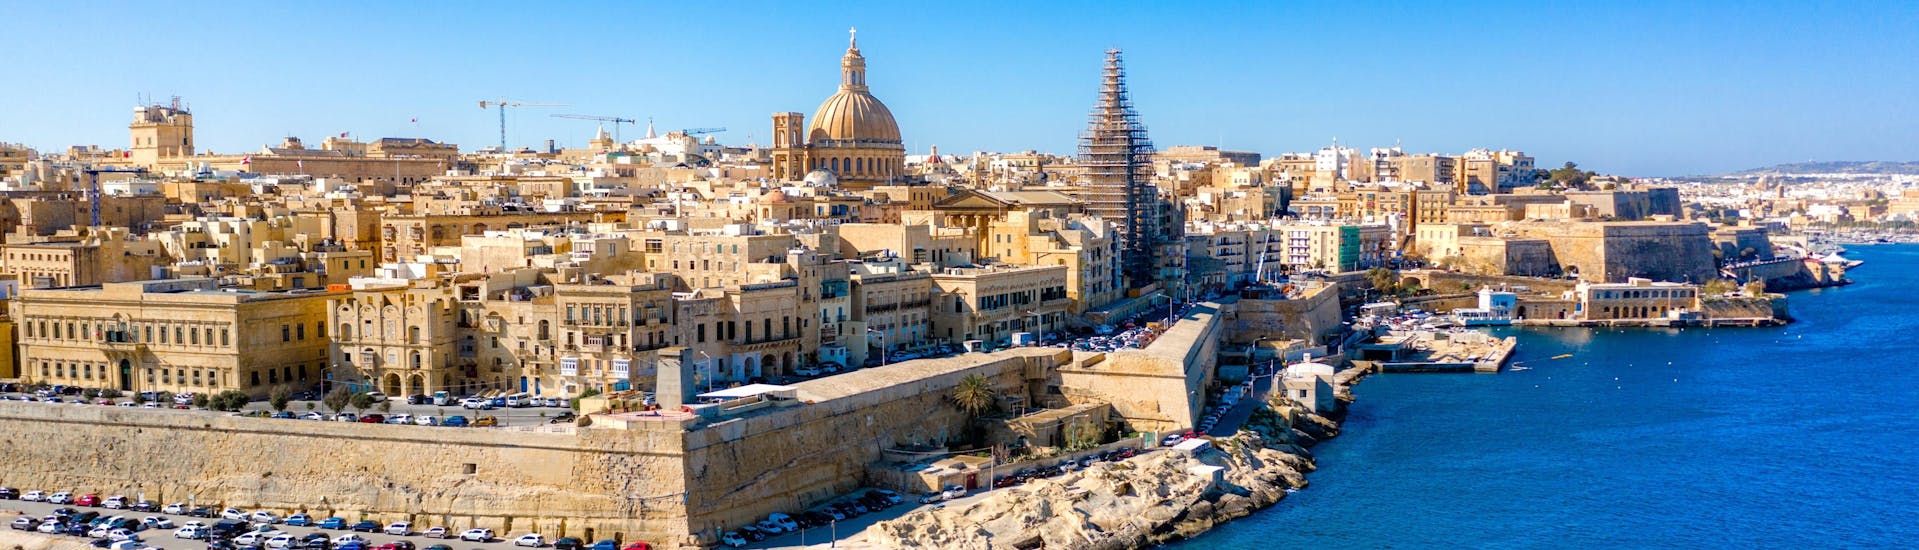 The city of Sliema and its coast in Malta.